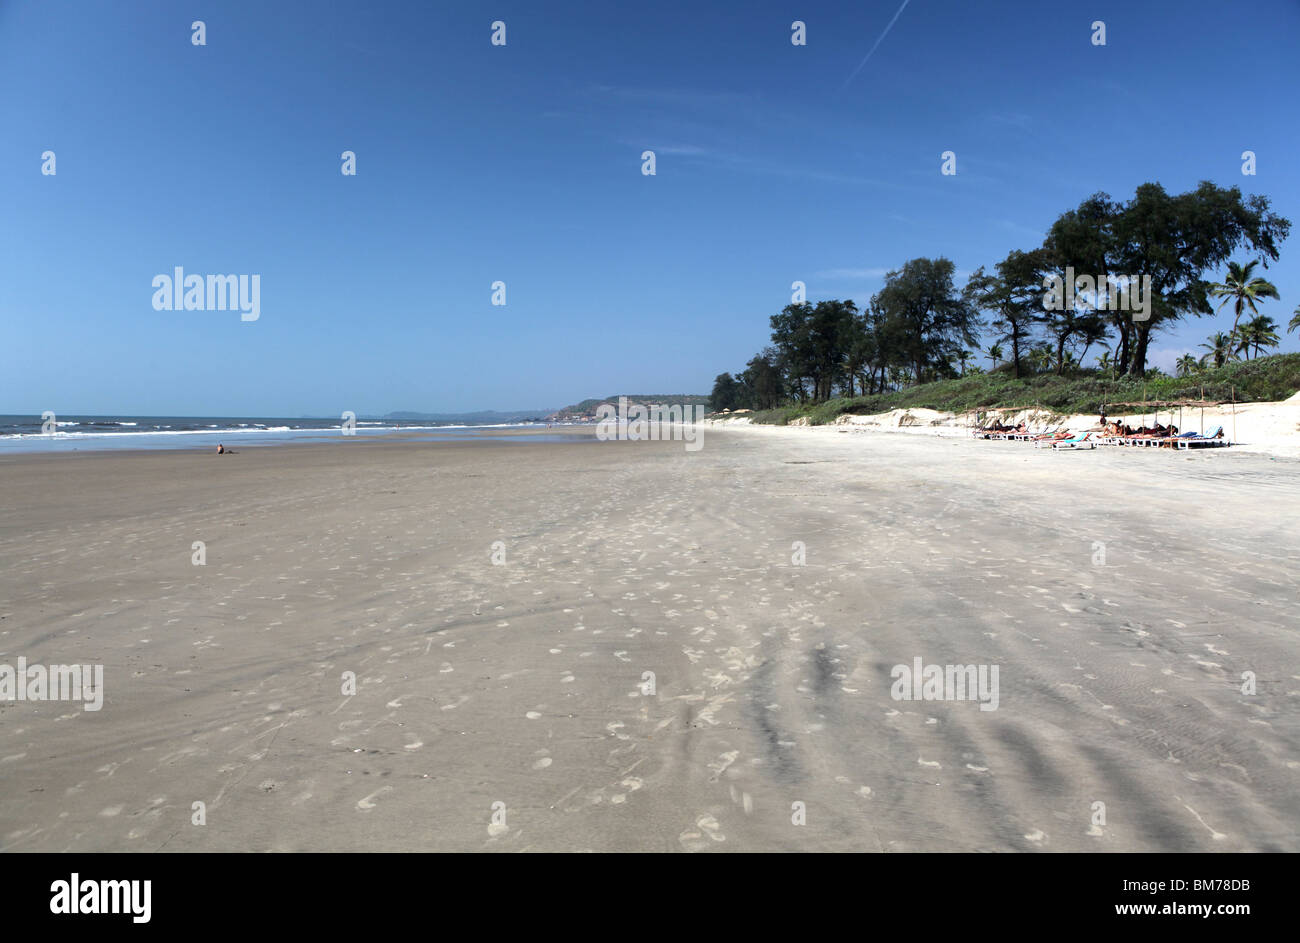 The beach at Arambol in northern Goa, Goa State, India. Stock Photo